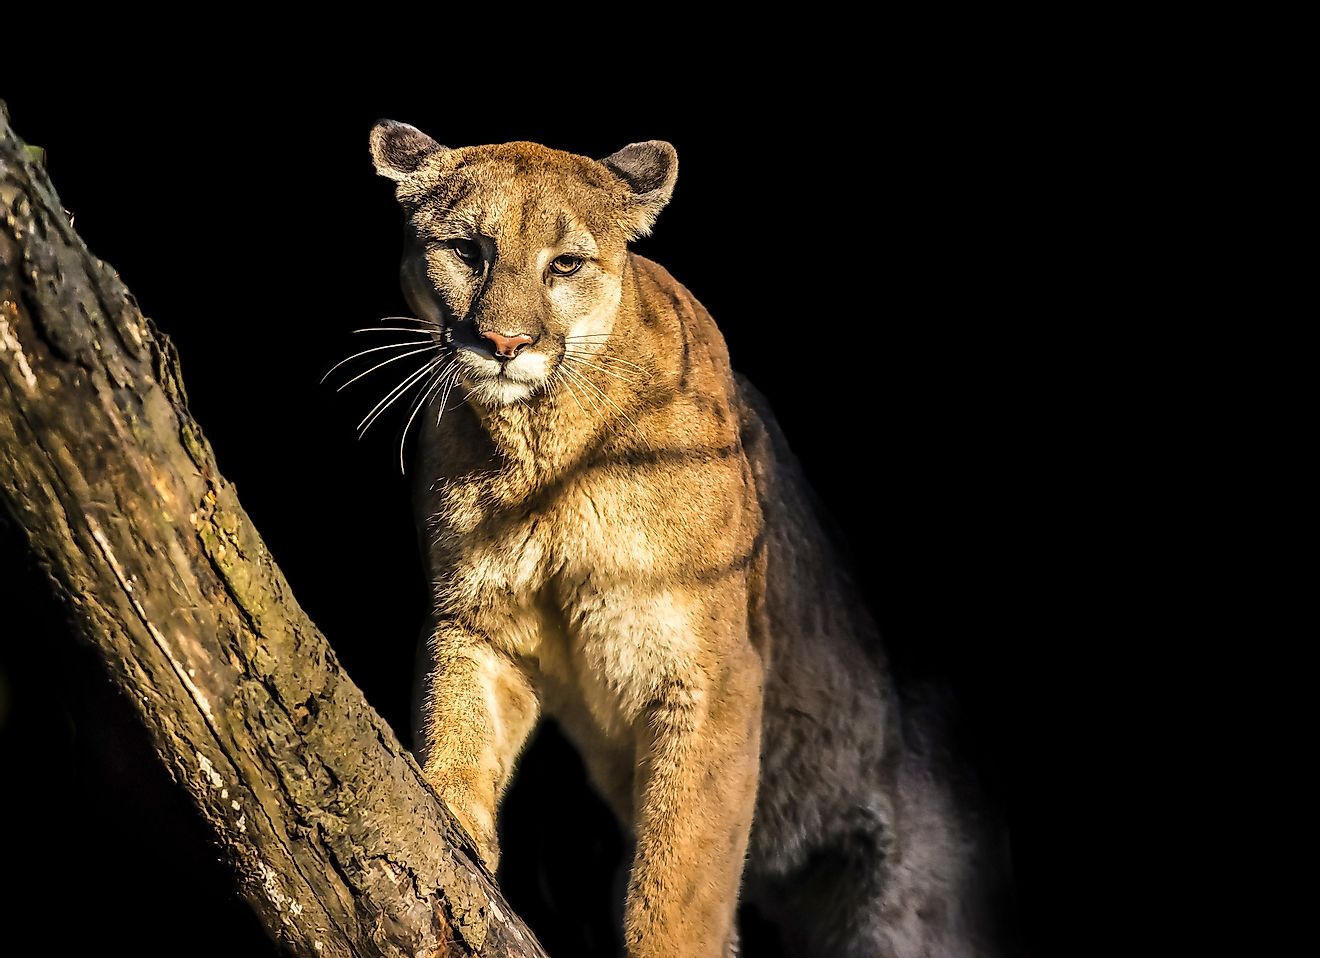  A gorgeous adult mountain lion. Image credit: Kris Wiktor/Shutterstock.com